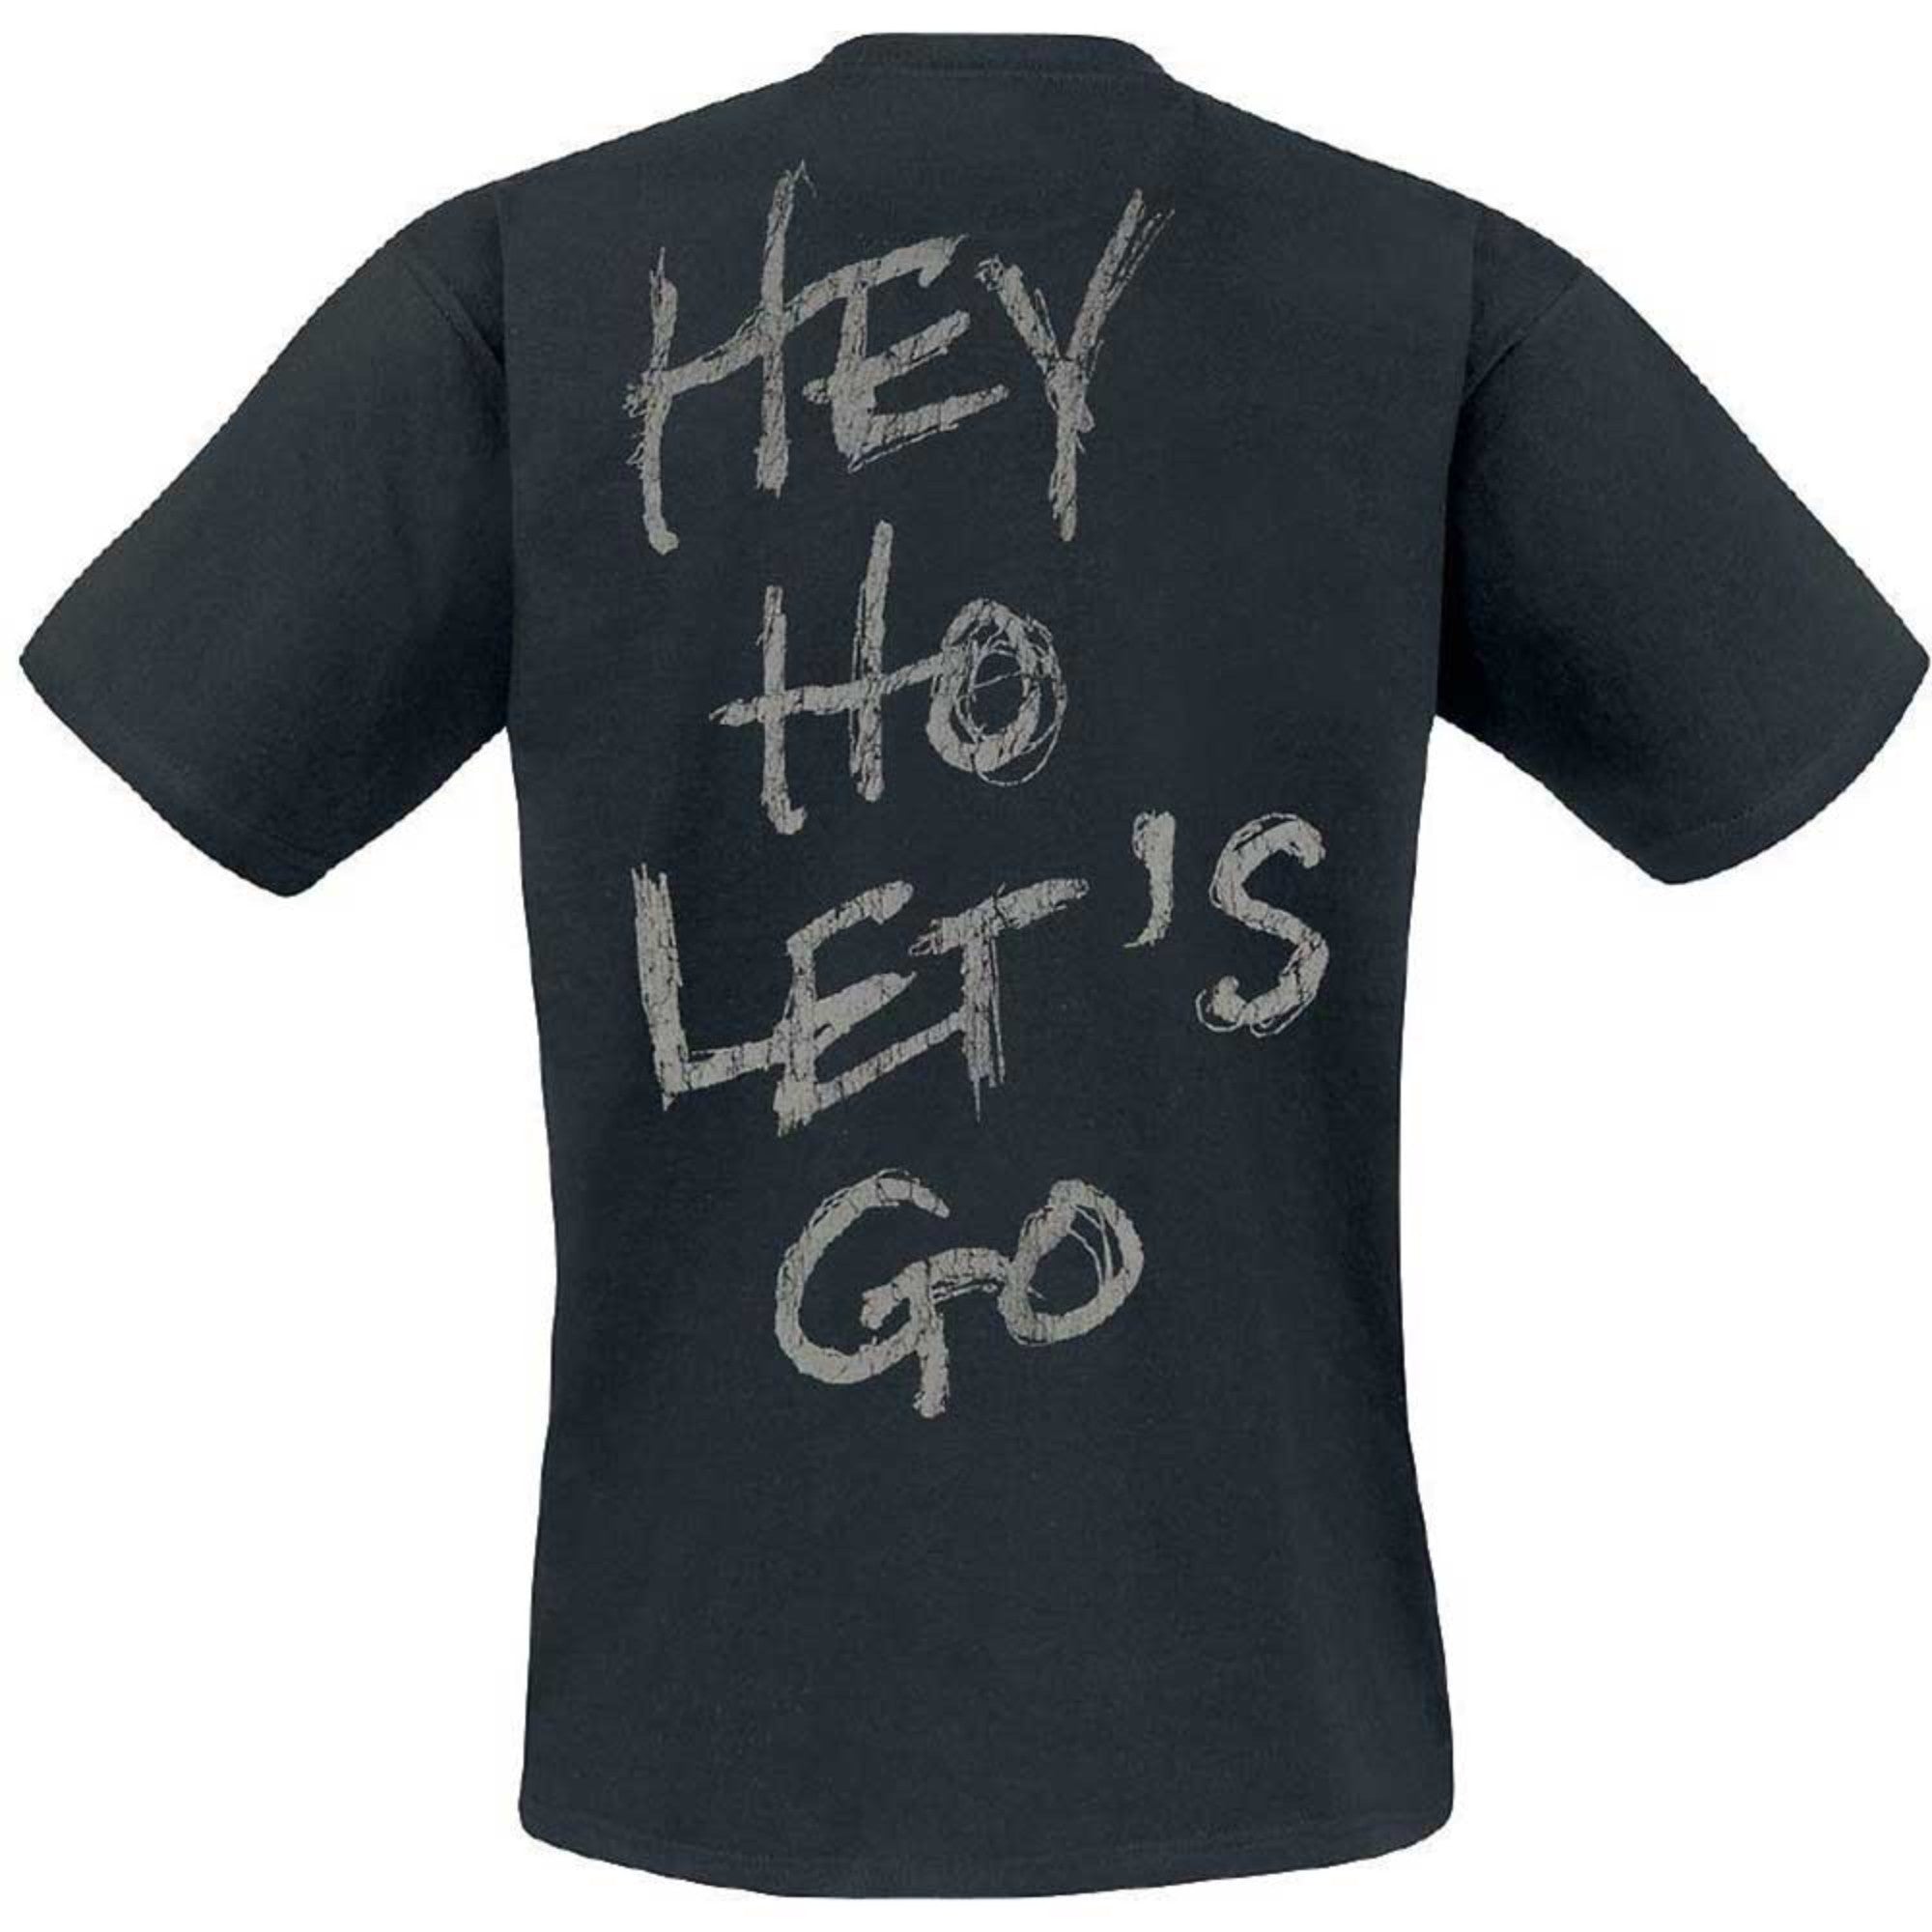 Ramones Classic Seal Hey Ho Back Print T-Shirt